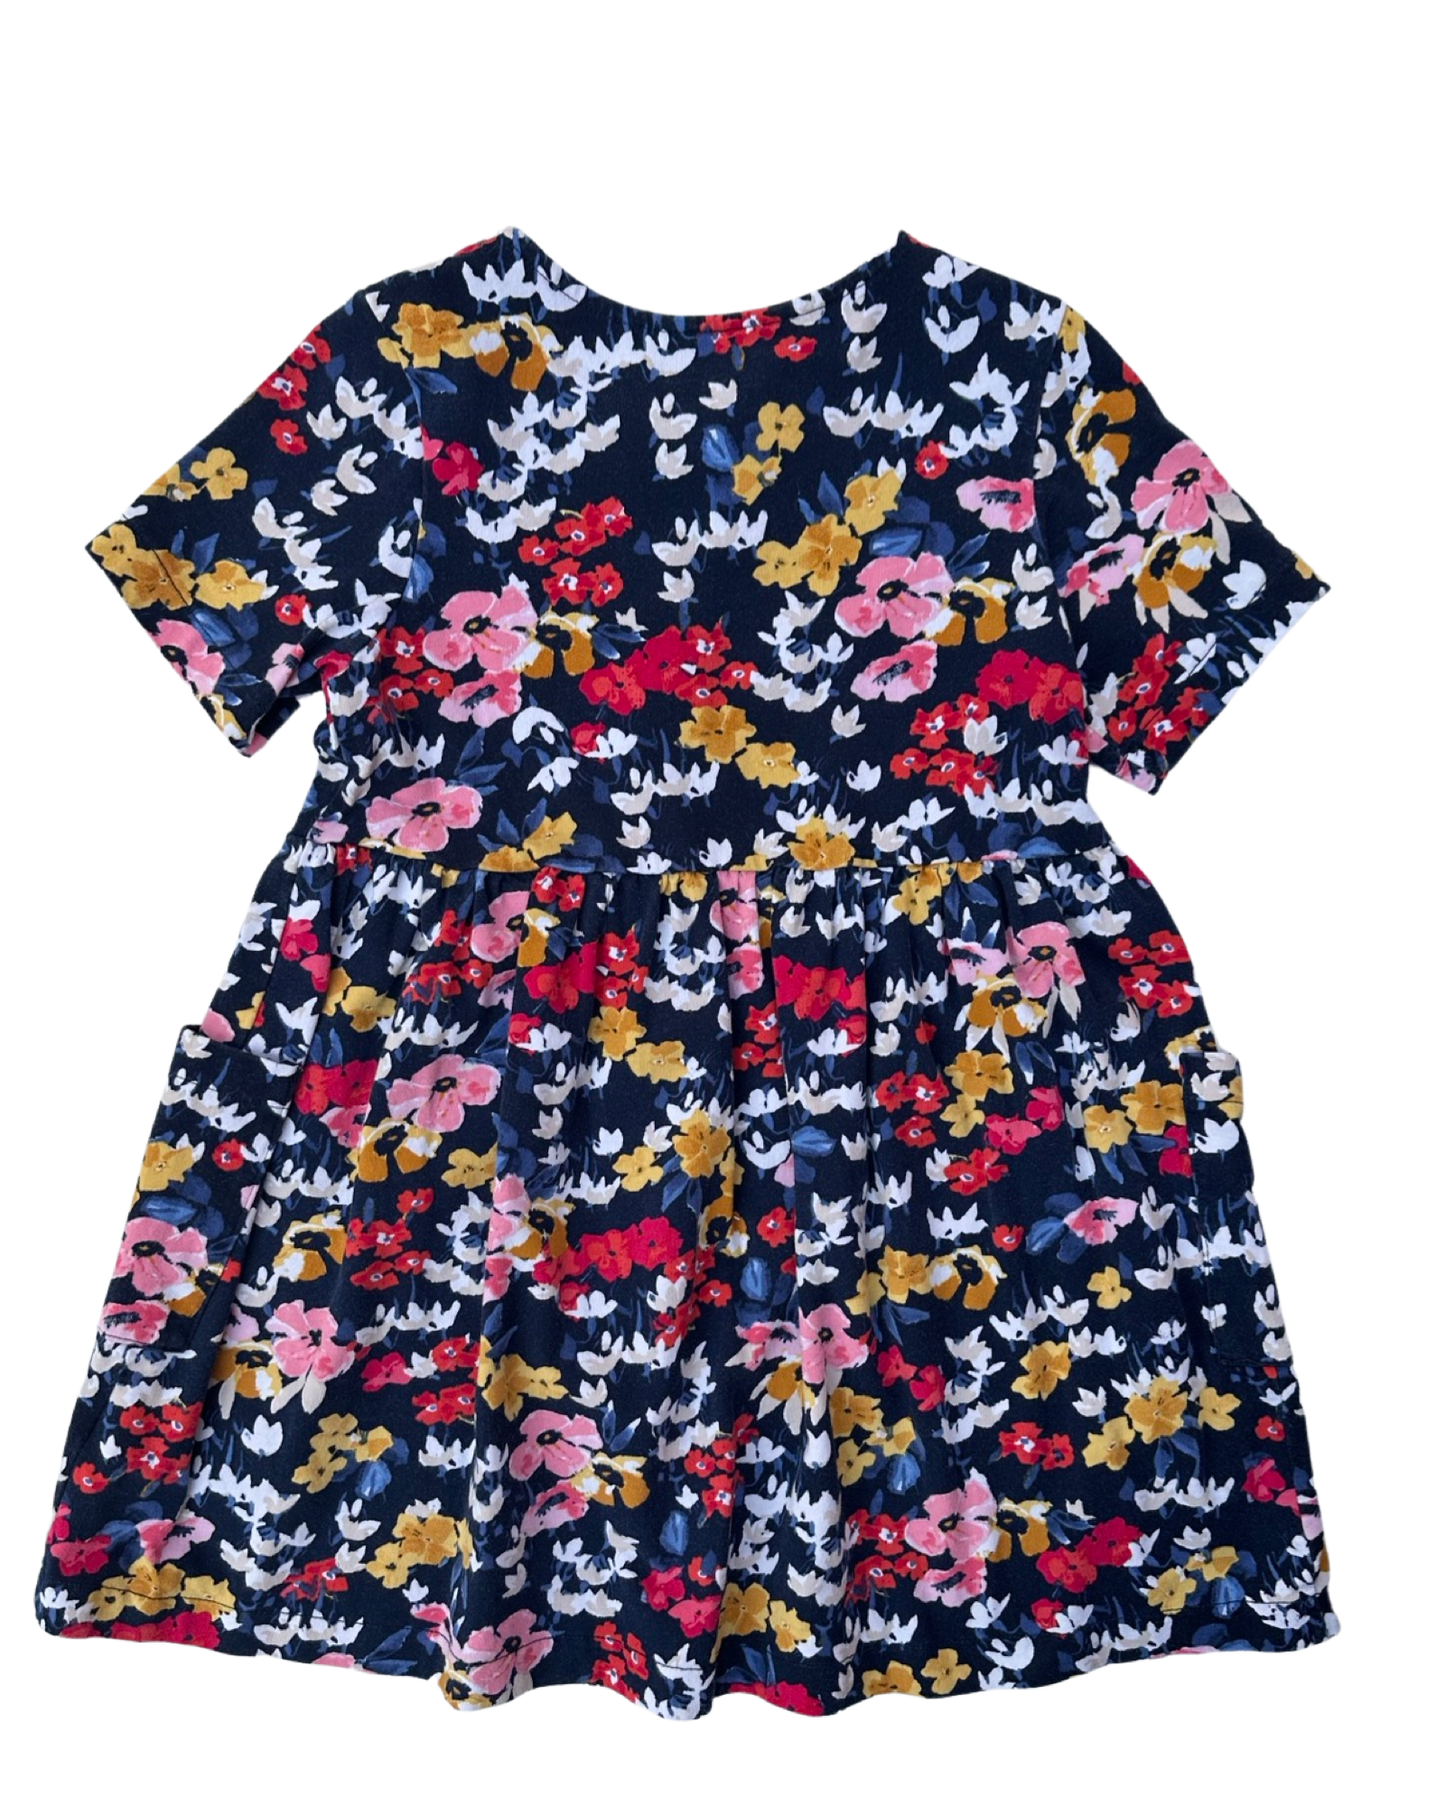 Joules floral print jersey dress (size 4yrs)